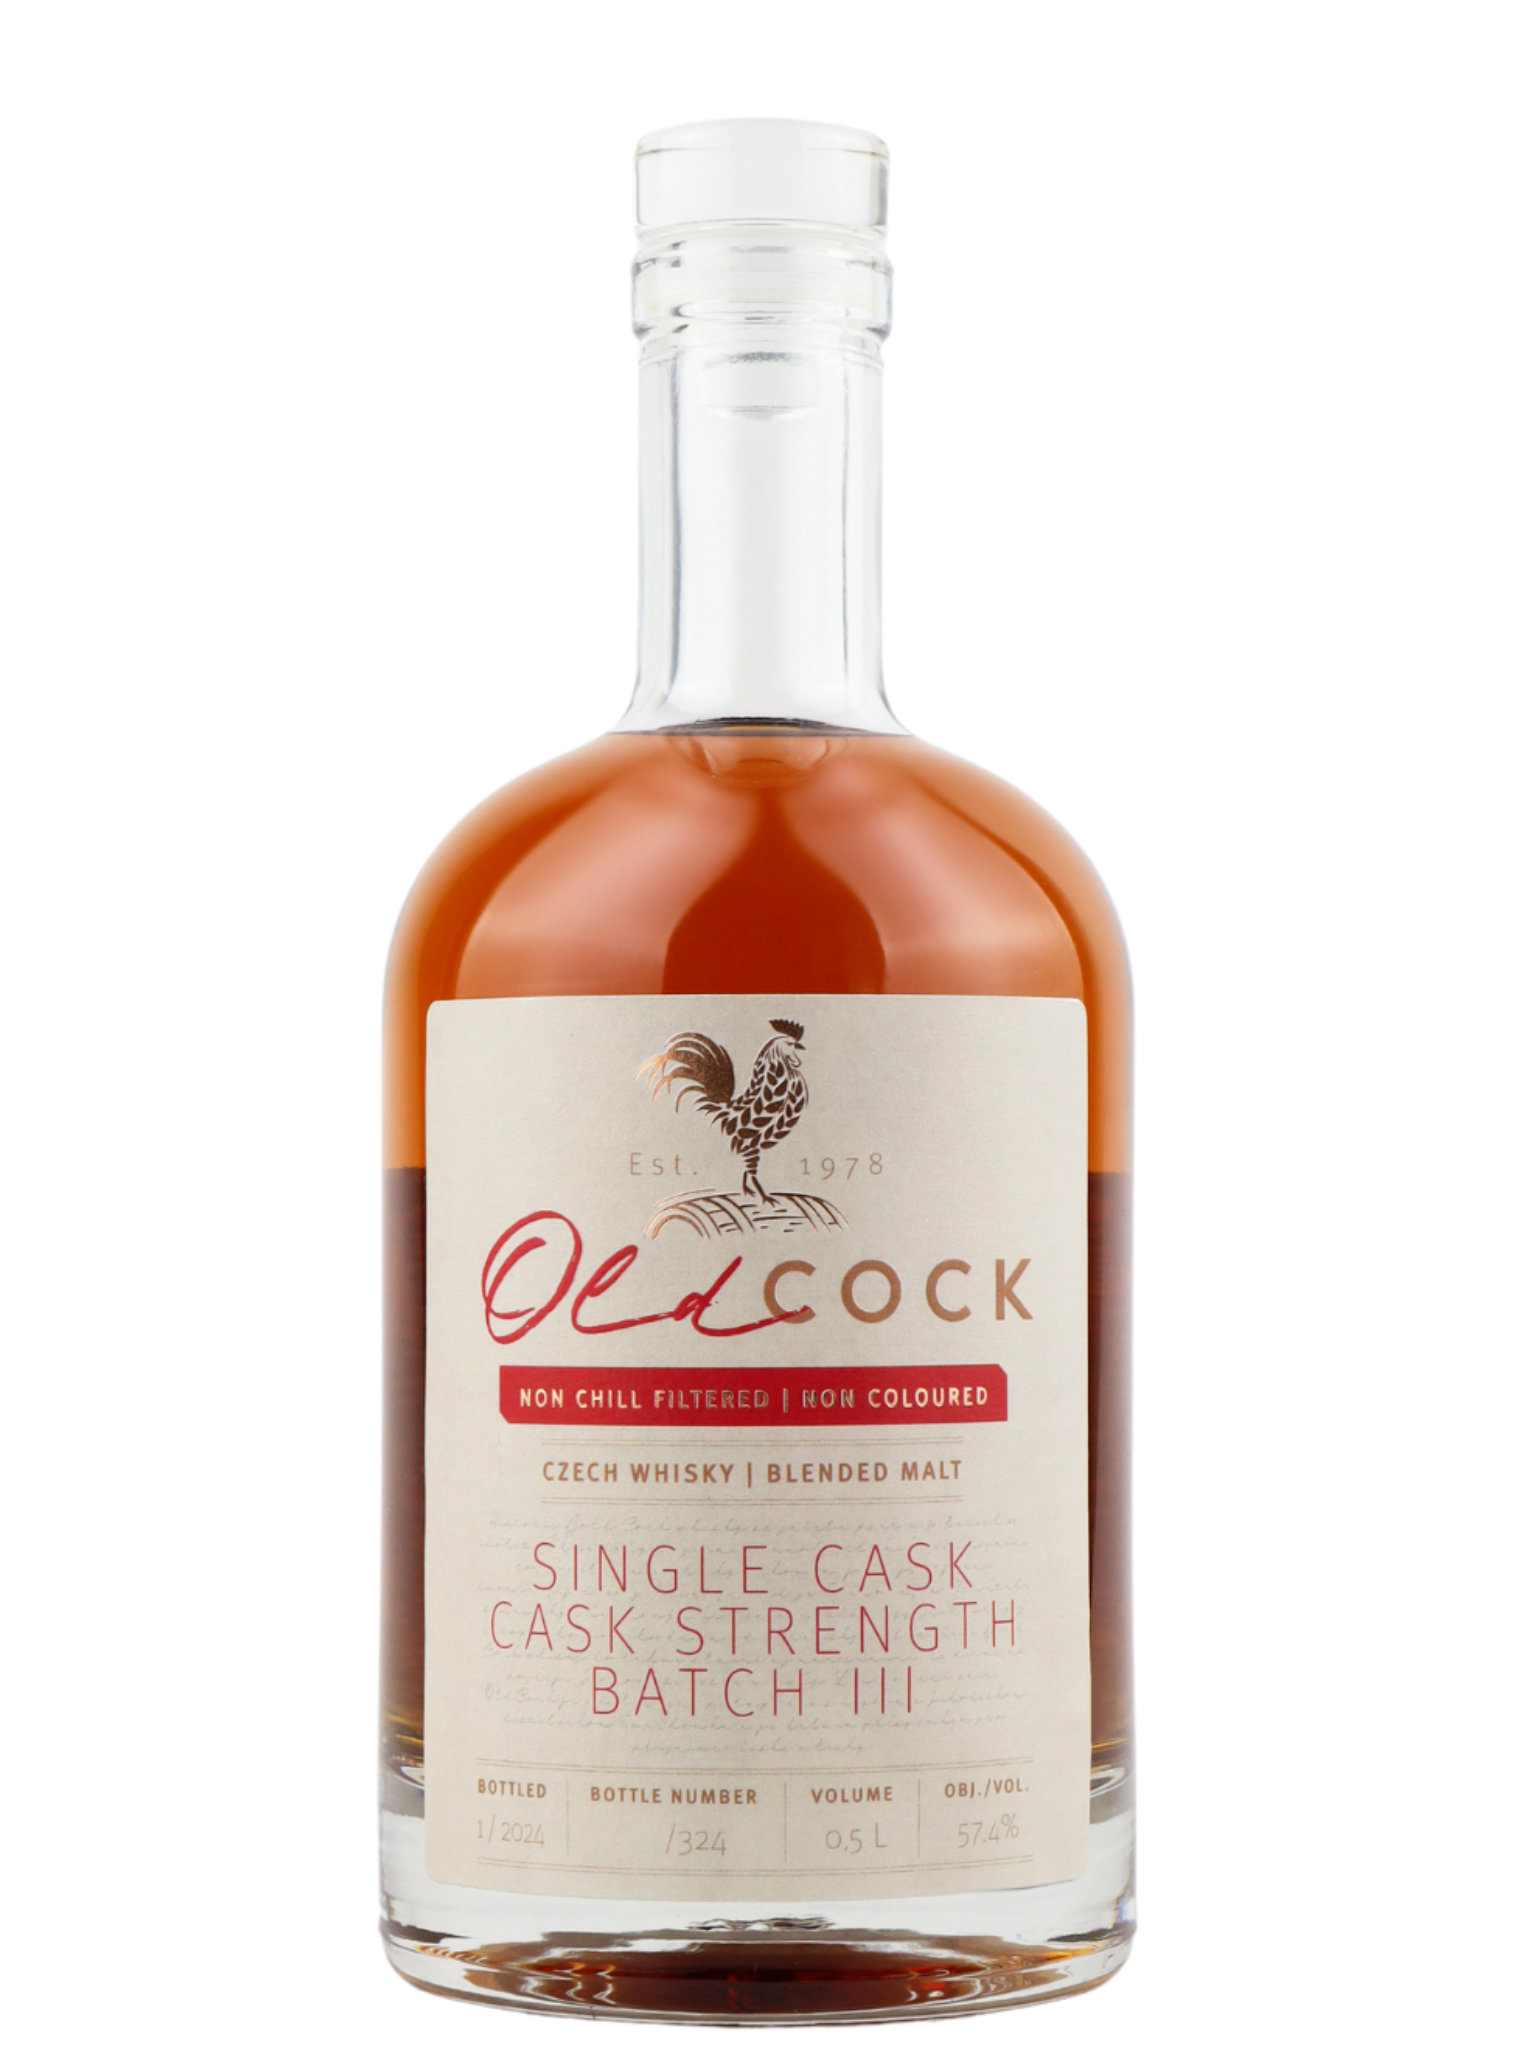 Levně GOLDCOCK Whisky OldCOCK Batch III 57,4% 0,5l